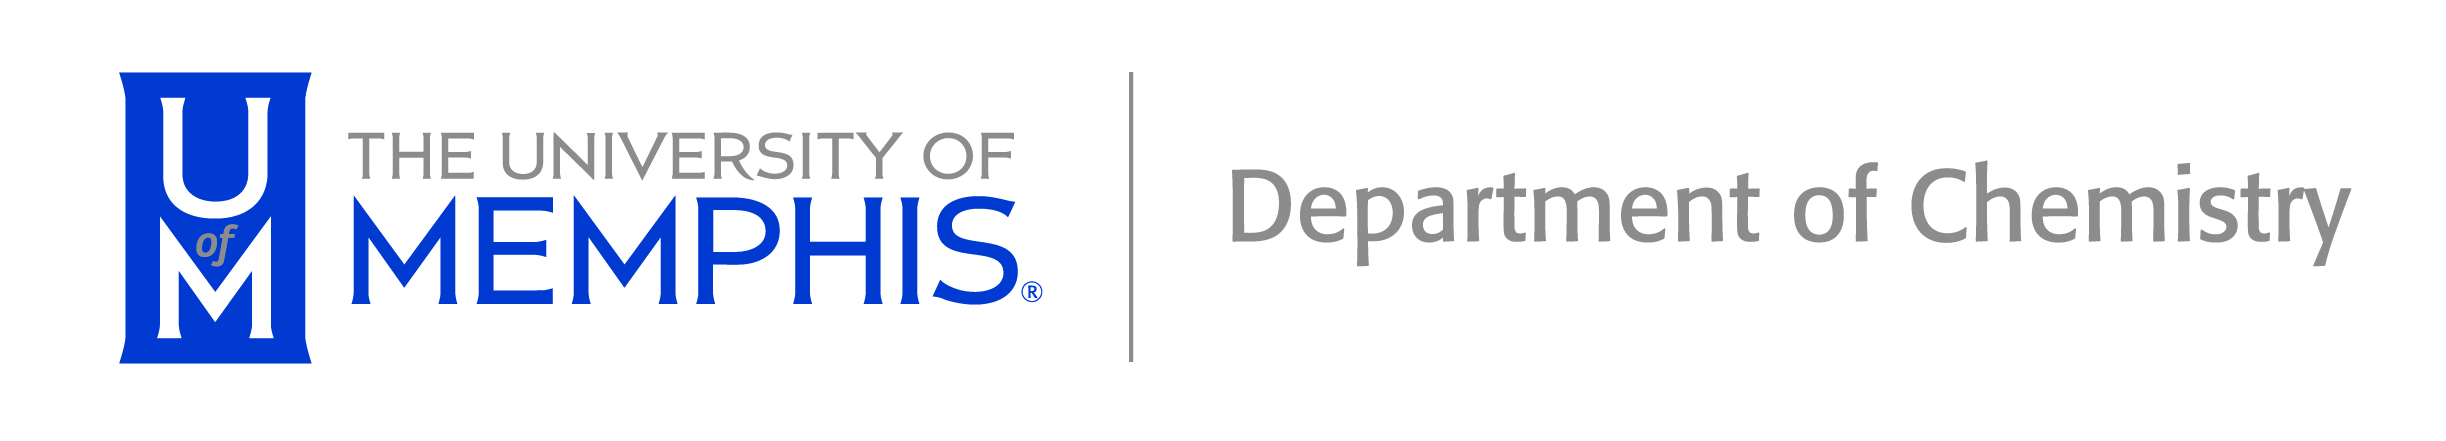 Department of Chemistry Logo